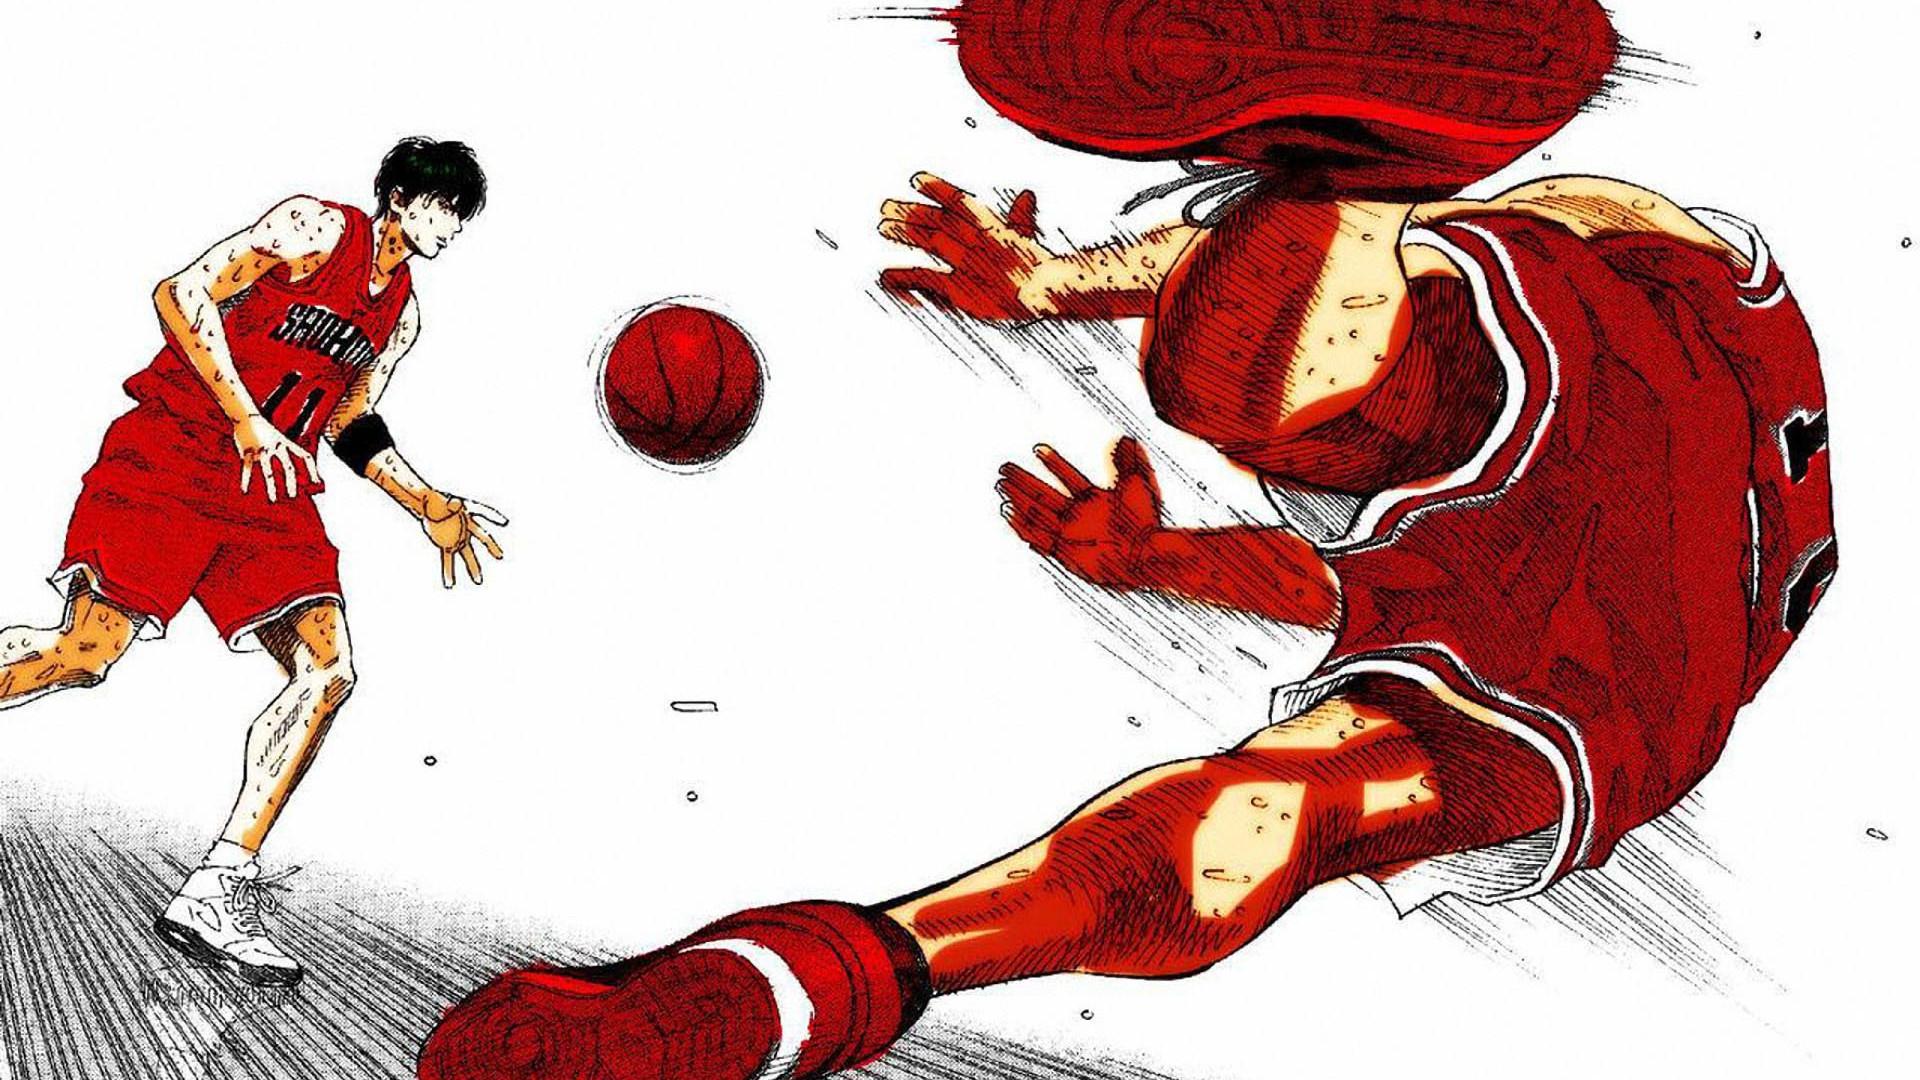 Slam Dunk Manga Wallpapers Top Free Slam Dunk Manga Backgrounds Wallpaperaccess